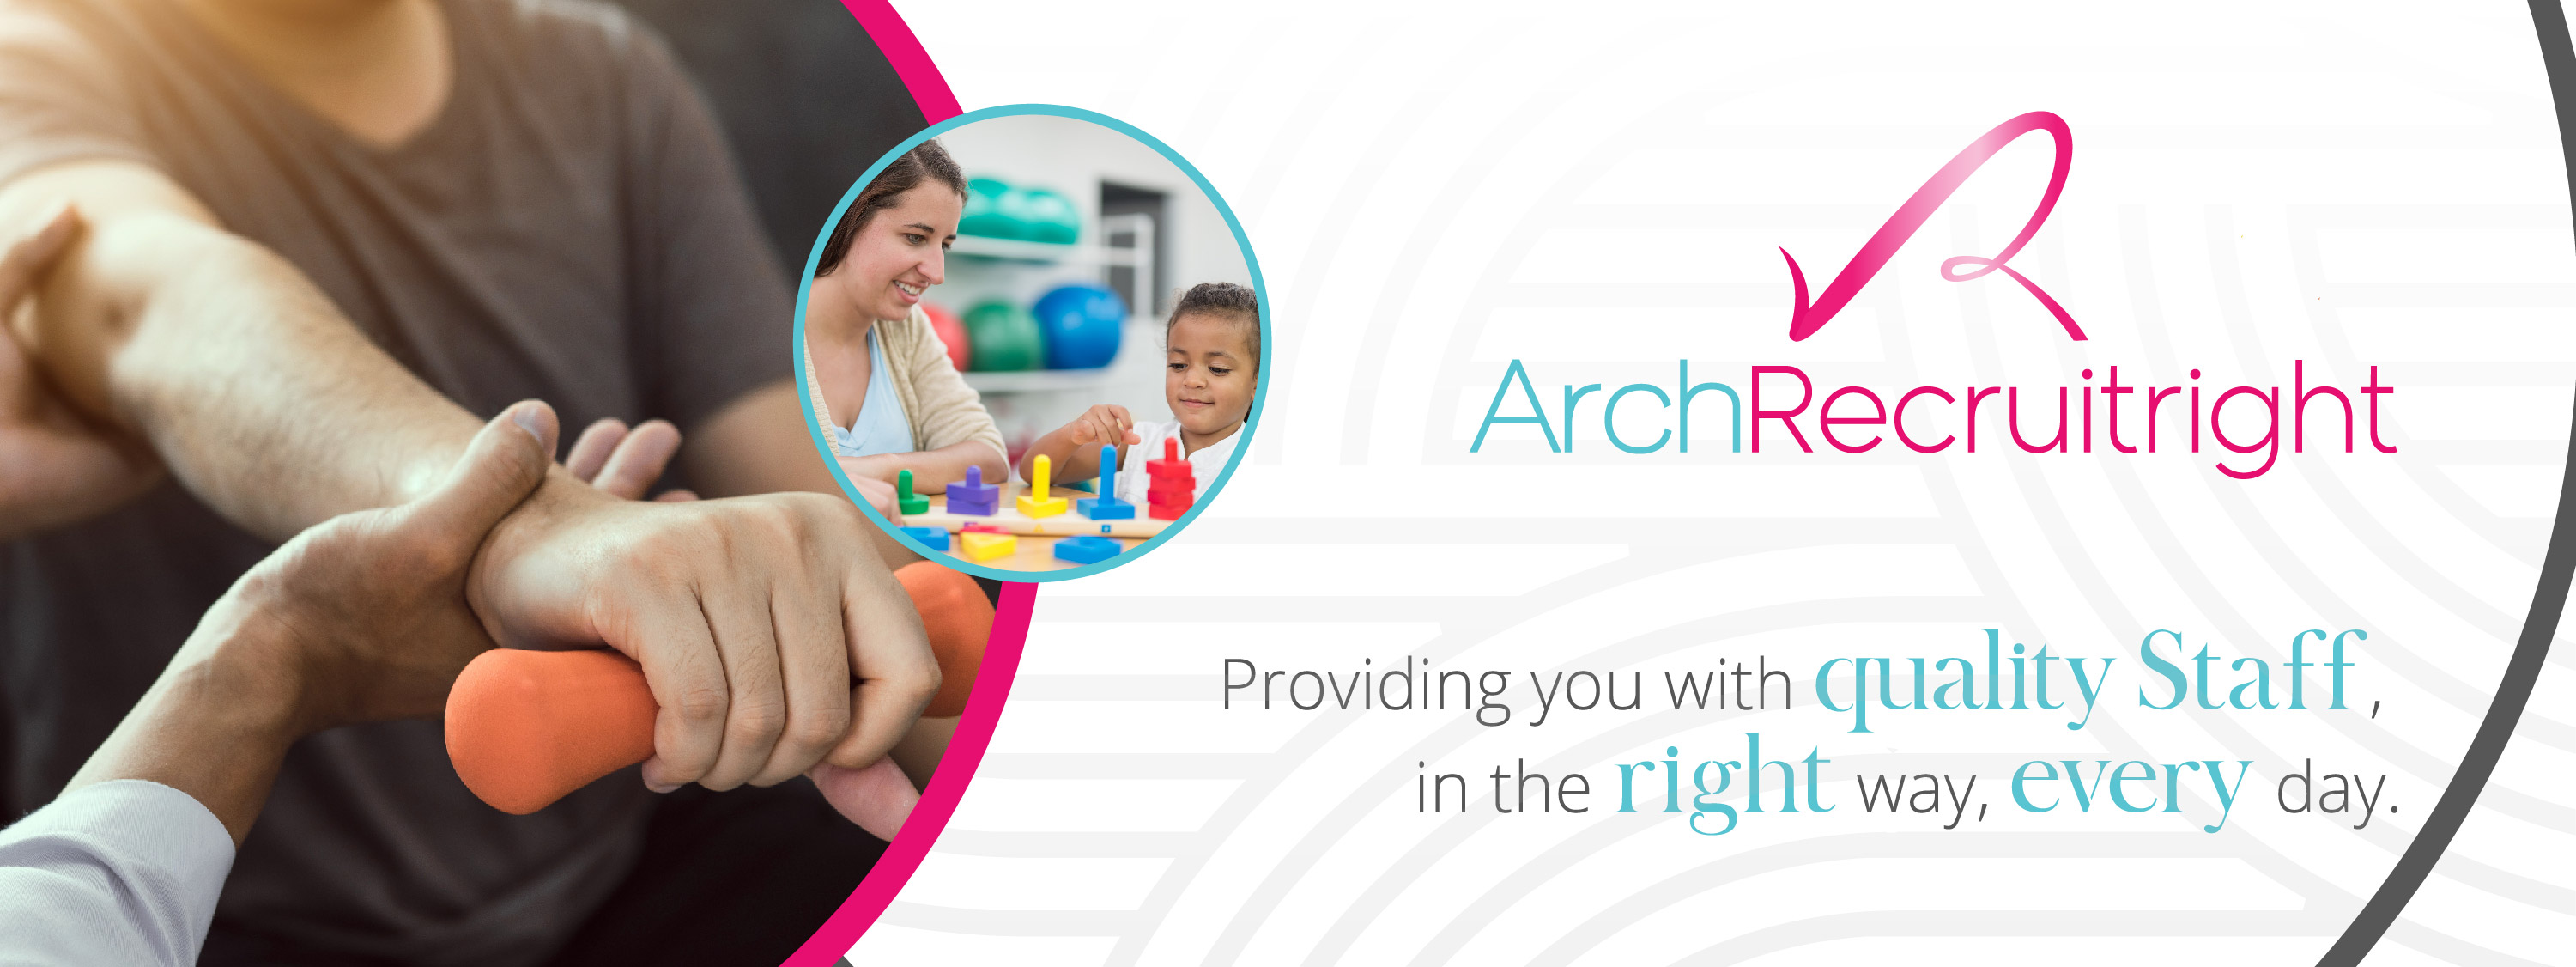 Arch Recruitright provides staff to healthcare professionals